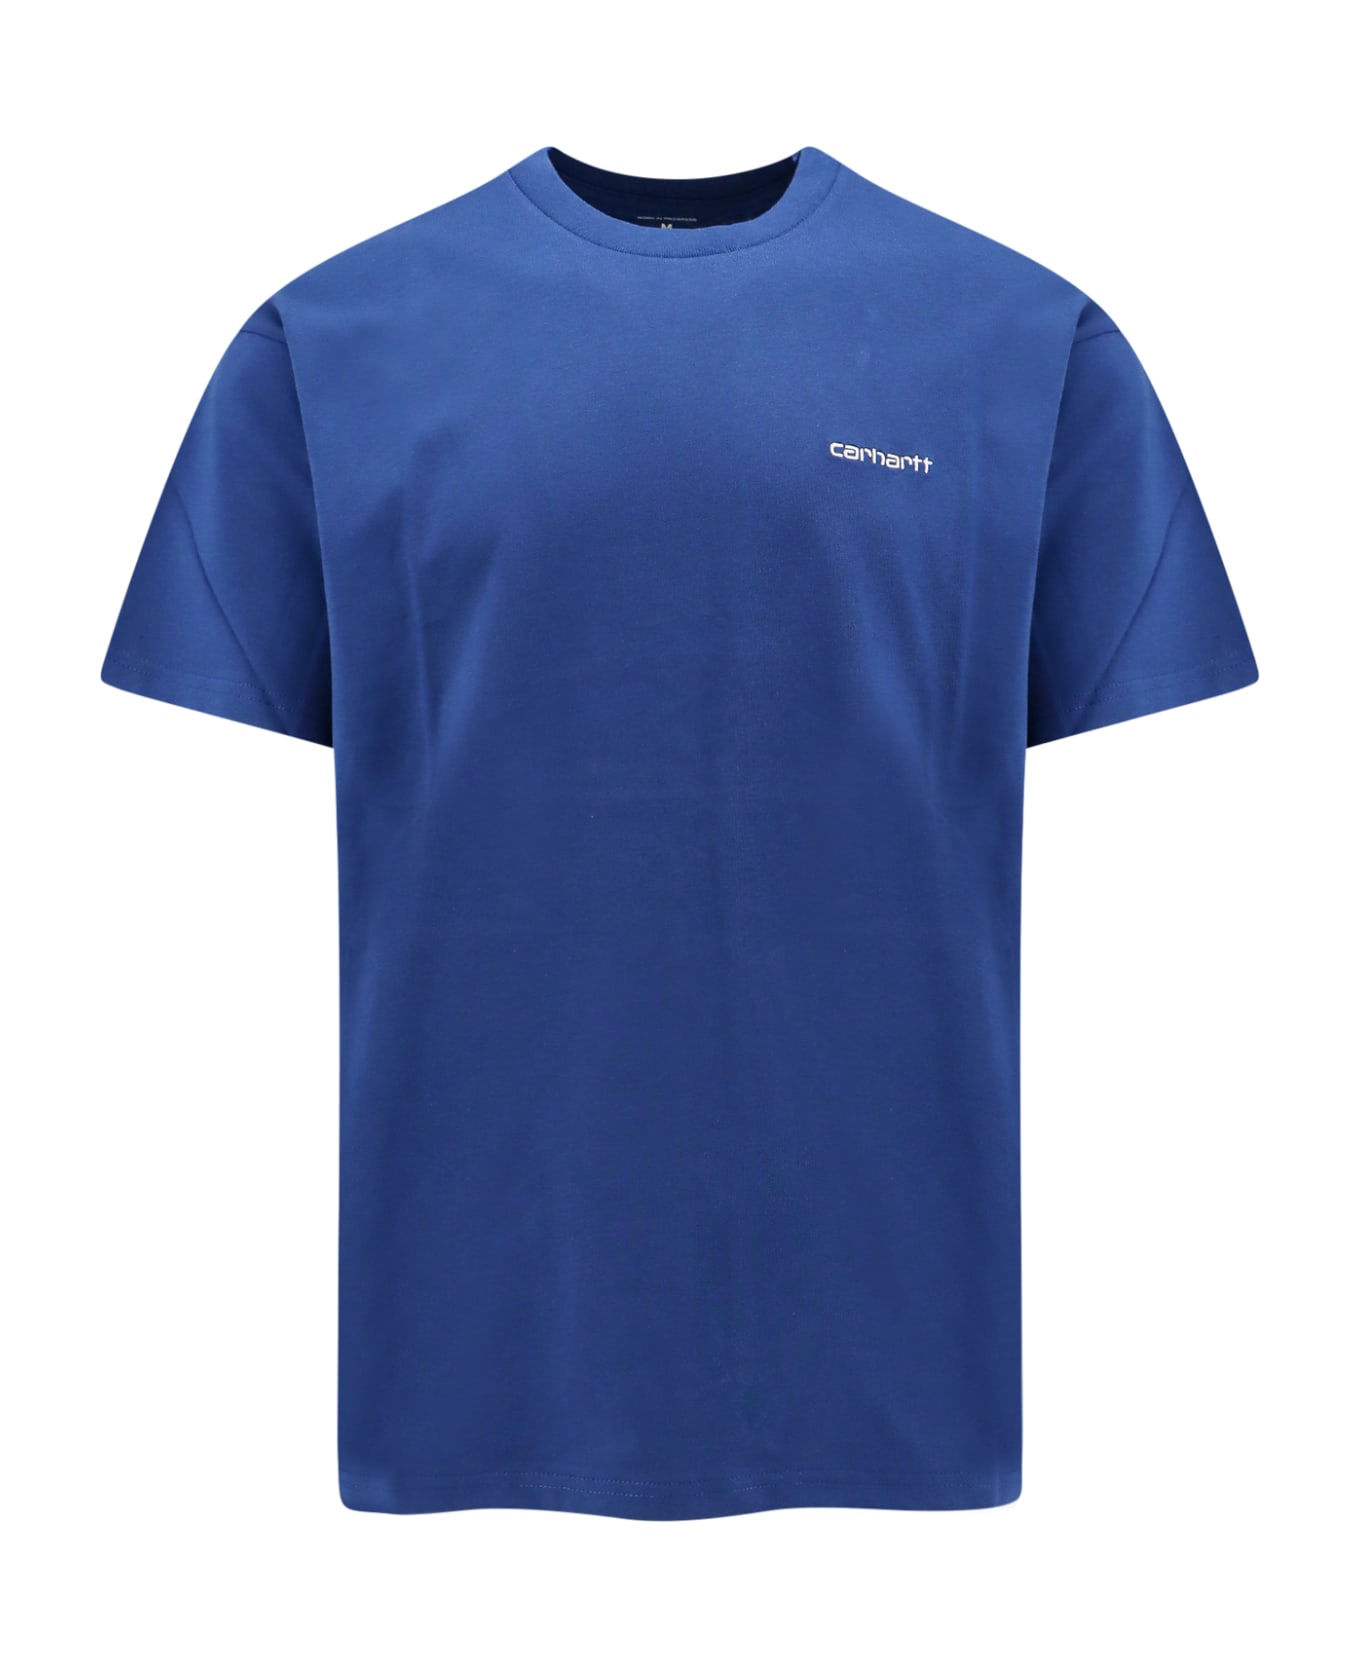 Carhartt Script Embroidery T-shirt - Blue シャツ